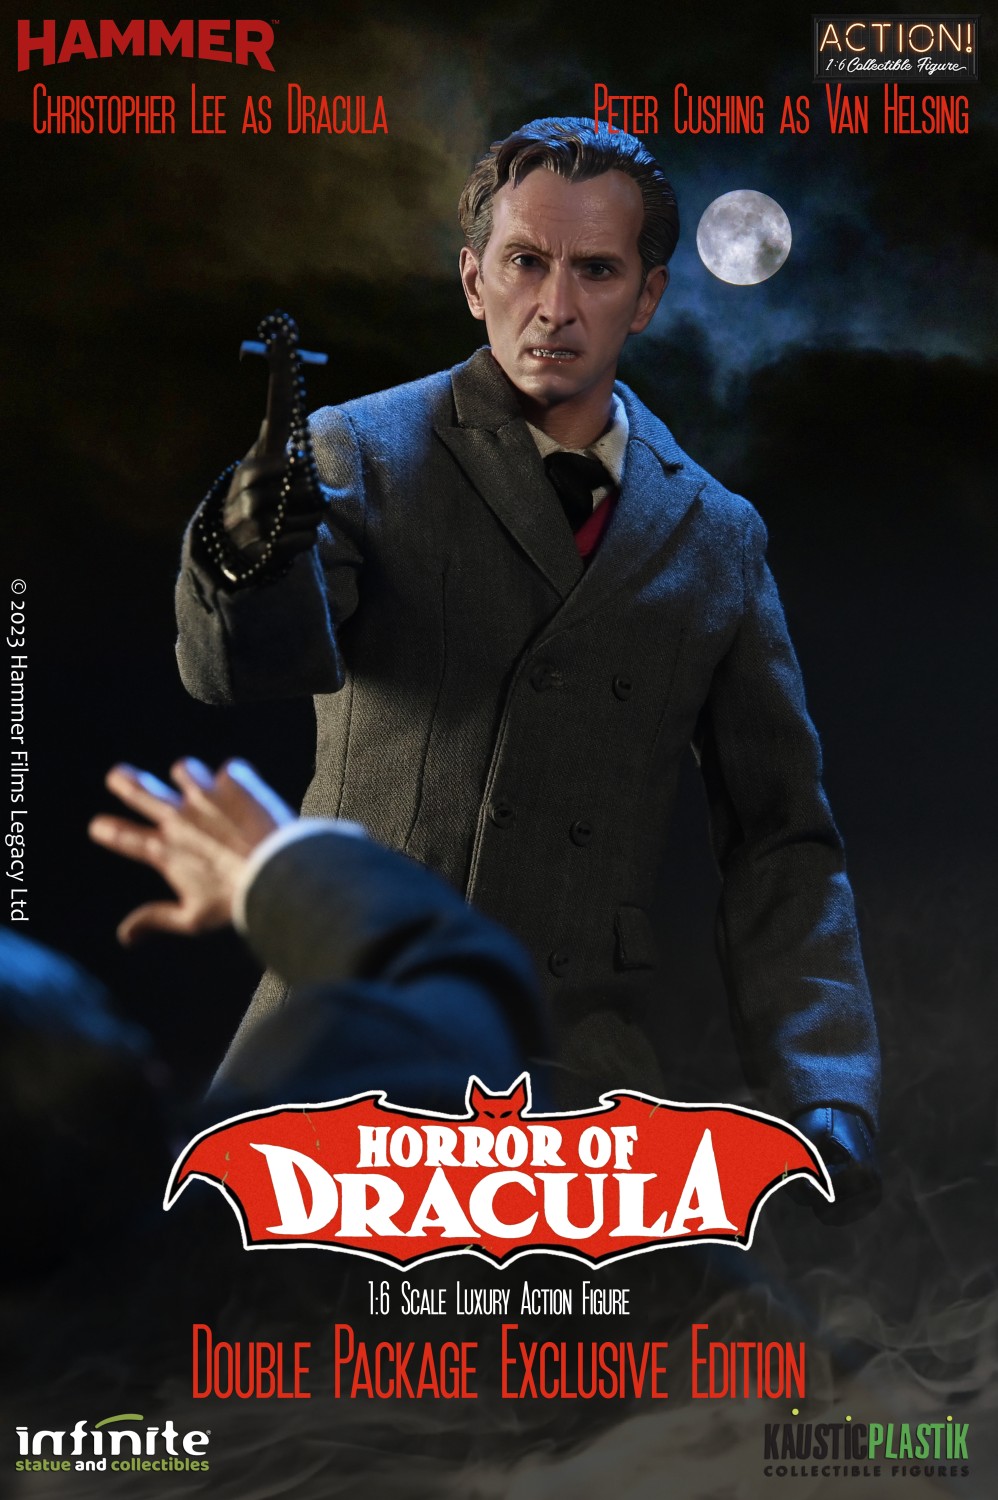 accessory - NEW PRODUCT: Kaustic Plastik & Infinite Statue: 1/6 scale Horror Of Dracula: Dracula & Van Helsing action figures 922